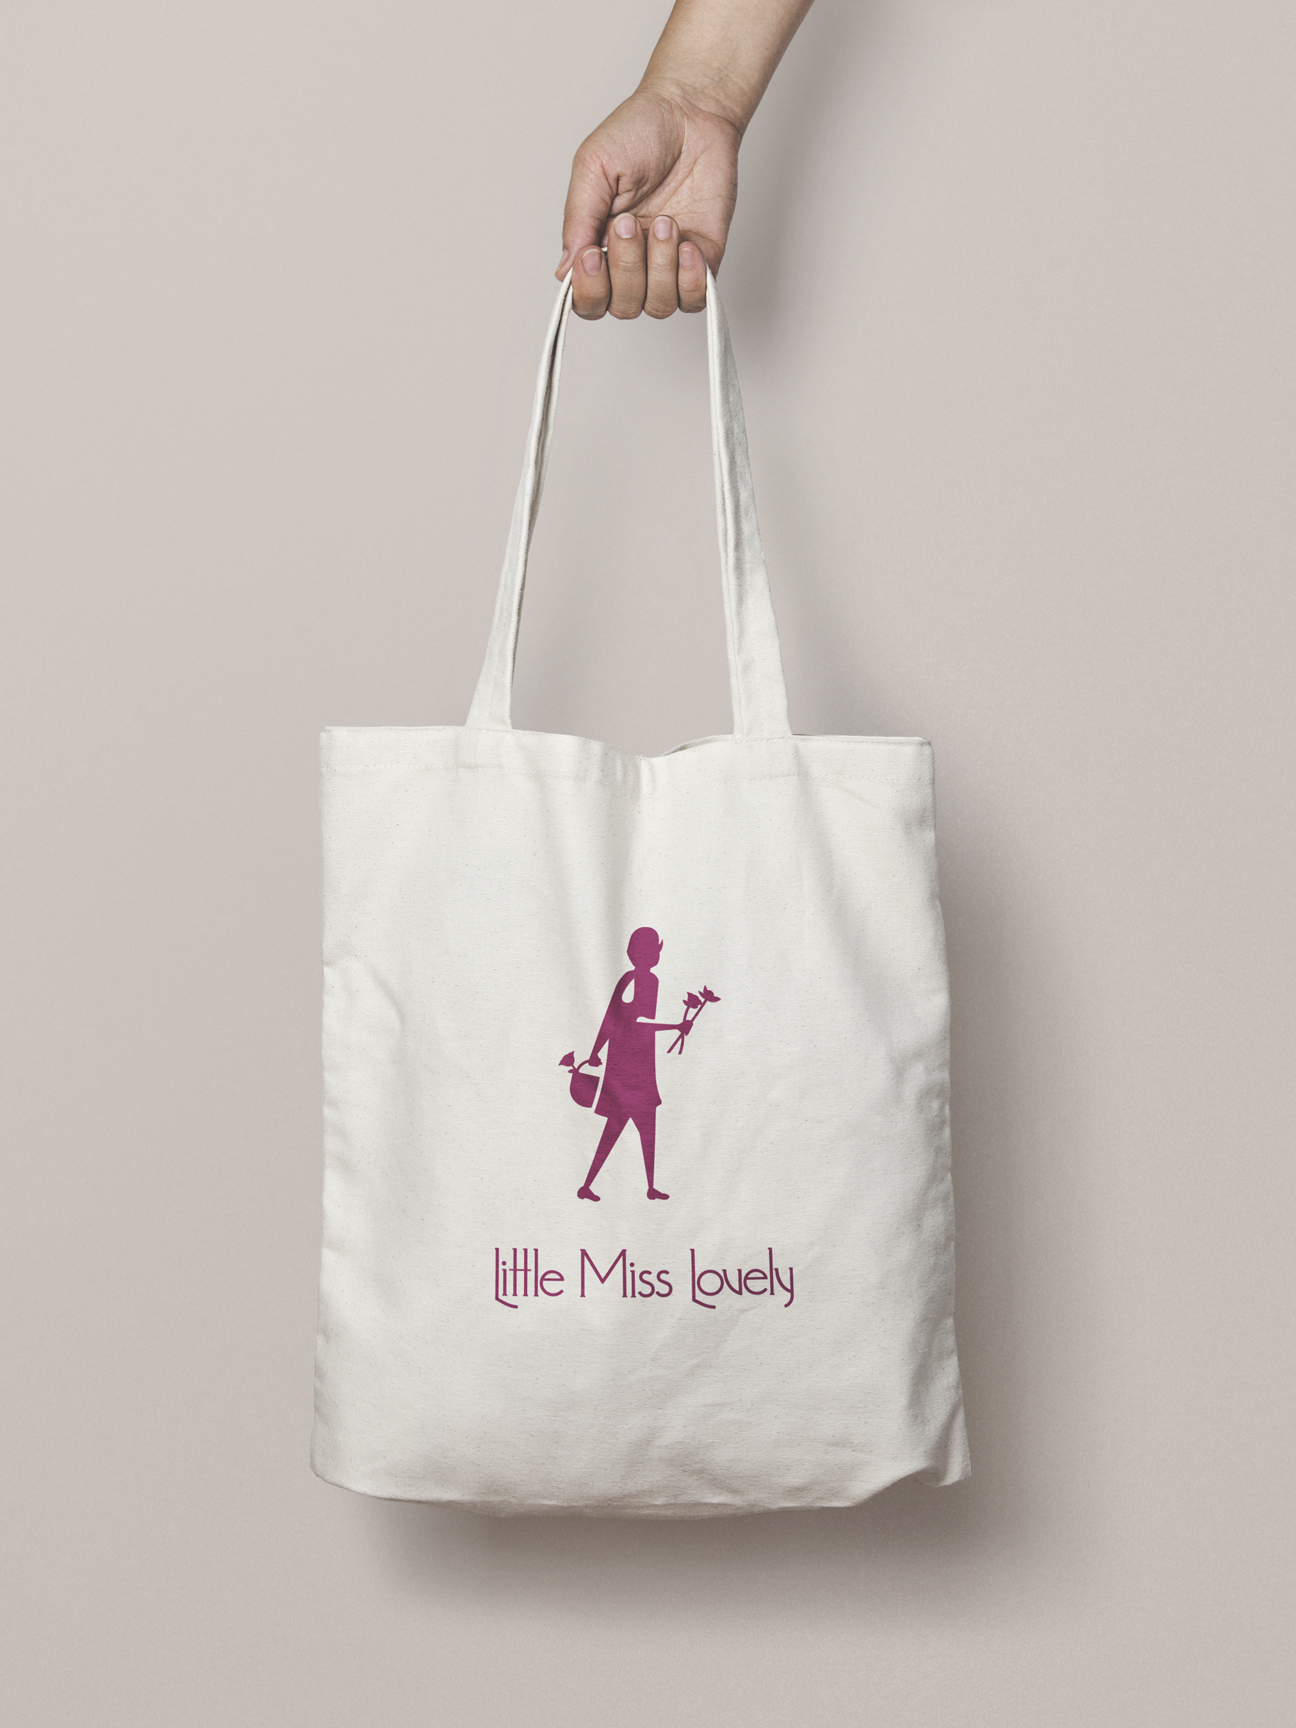 little miss lovely tote bag mockup